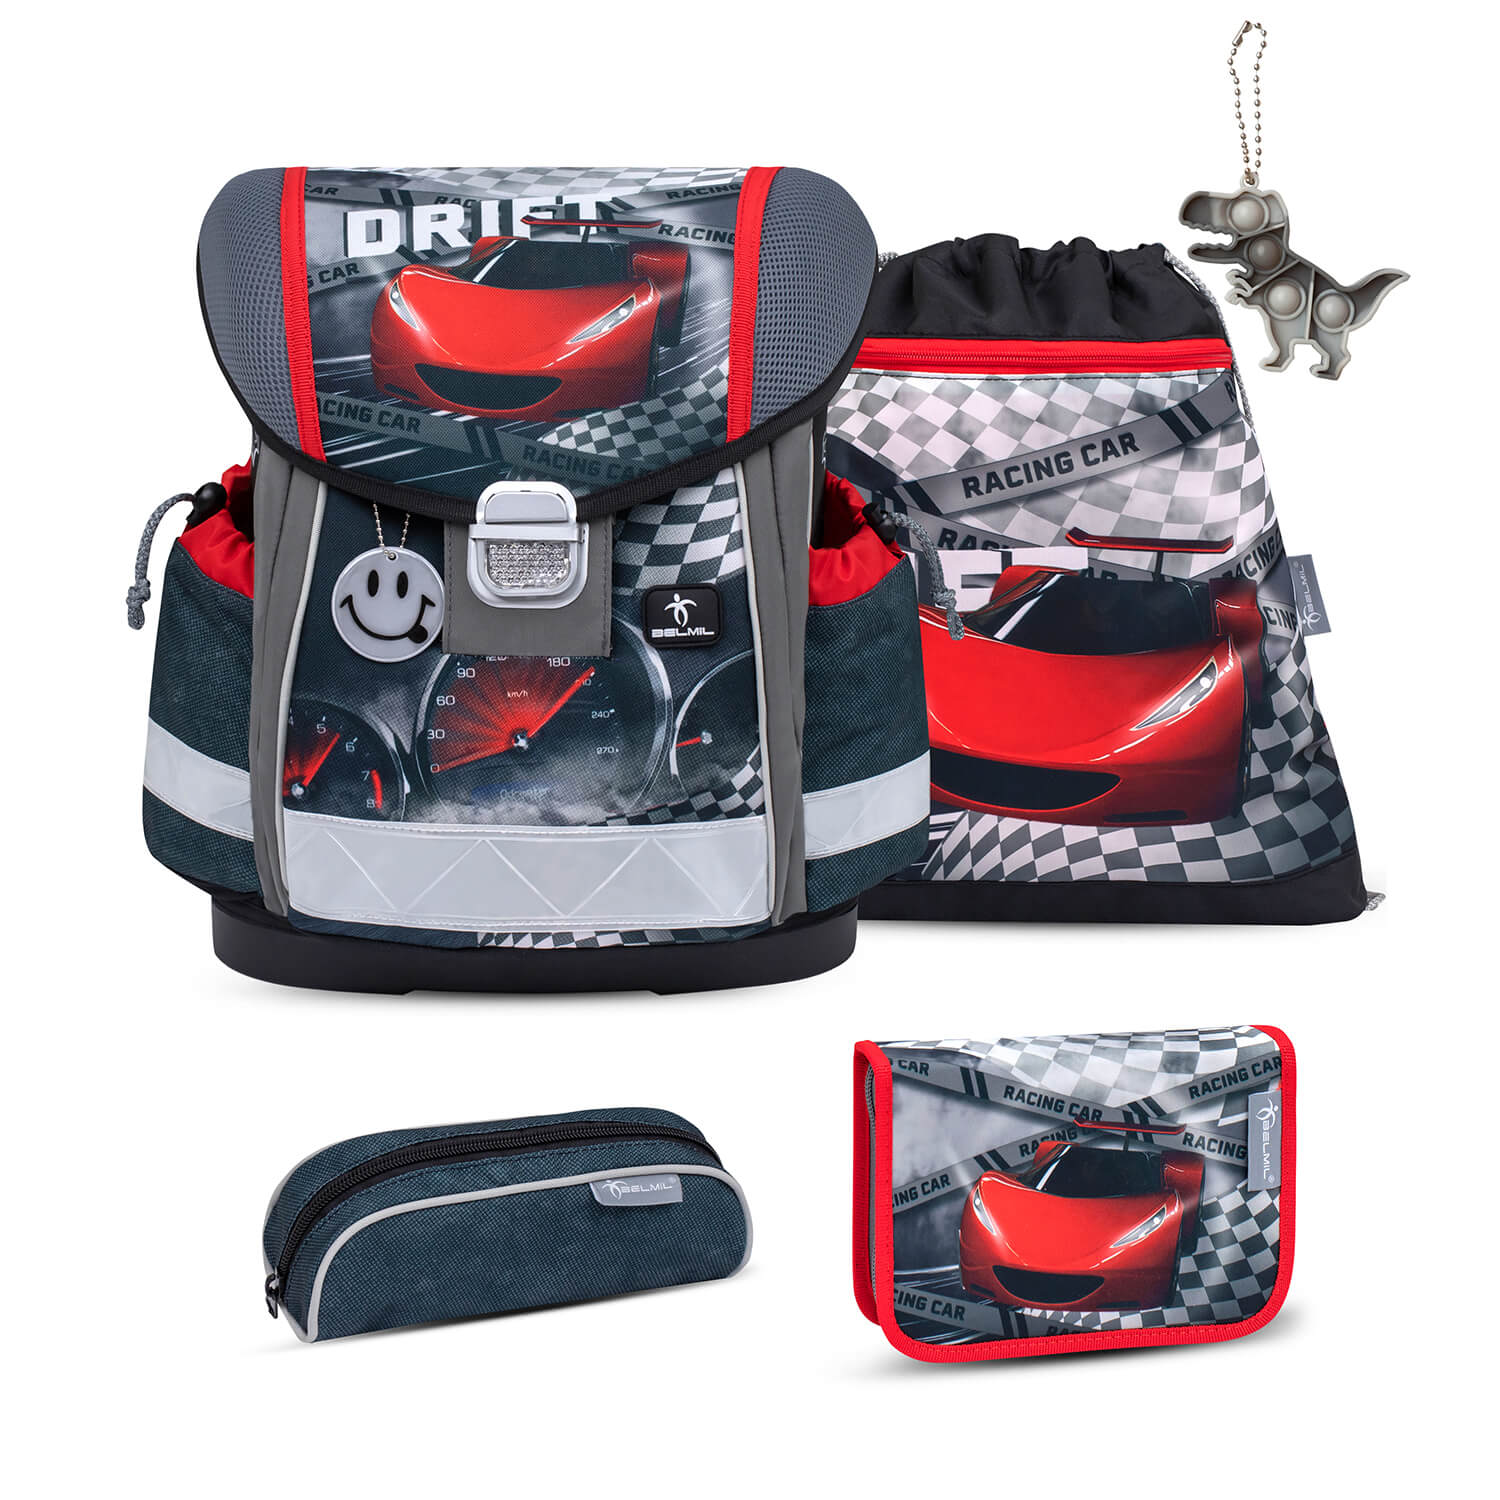 Classy Drift Racing schoolbag set 5 pcs with GRATIS keychain